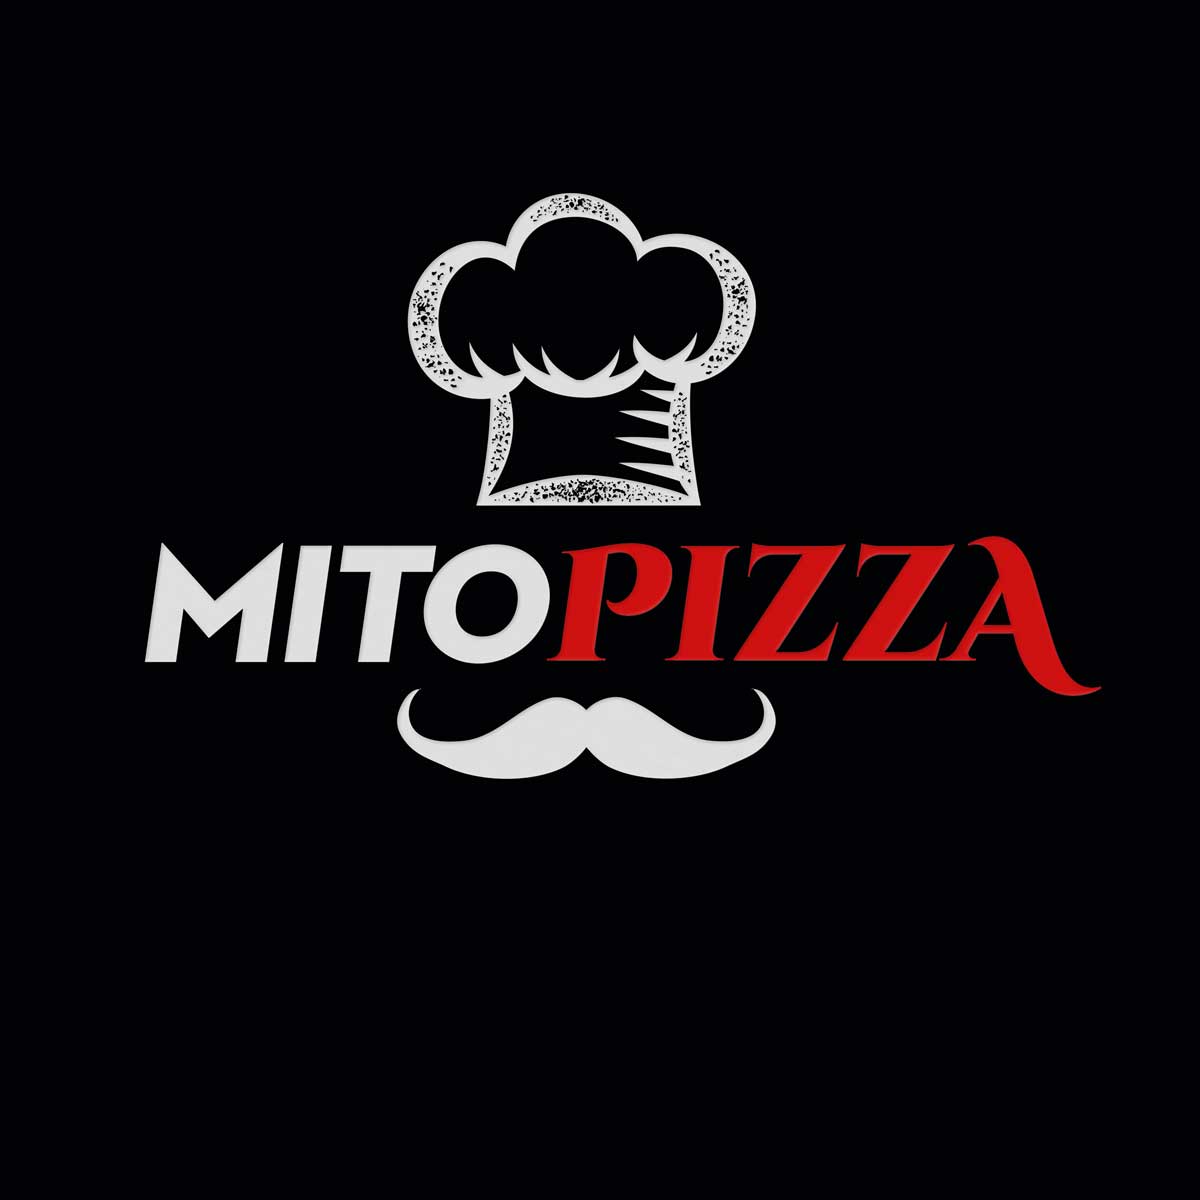 MitoPizza - Brand name by Brandizle